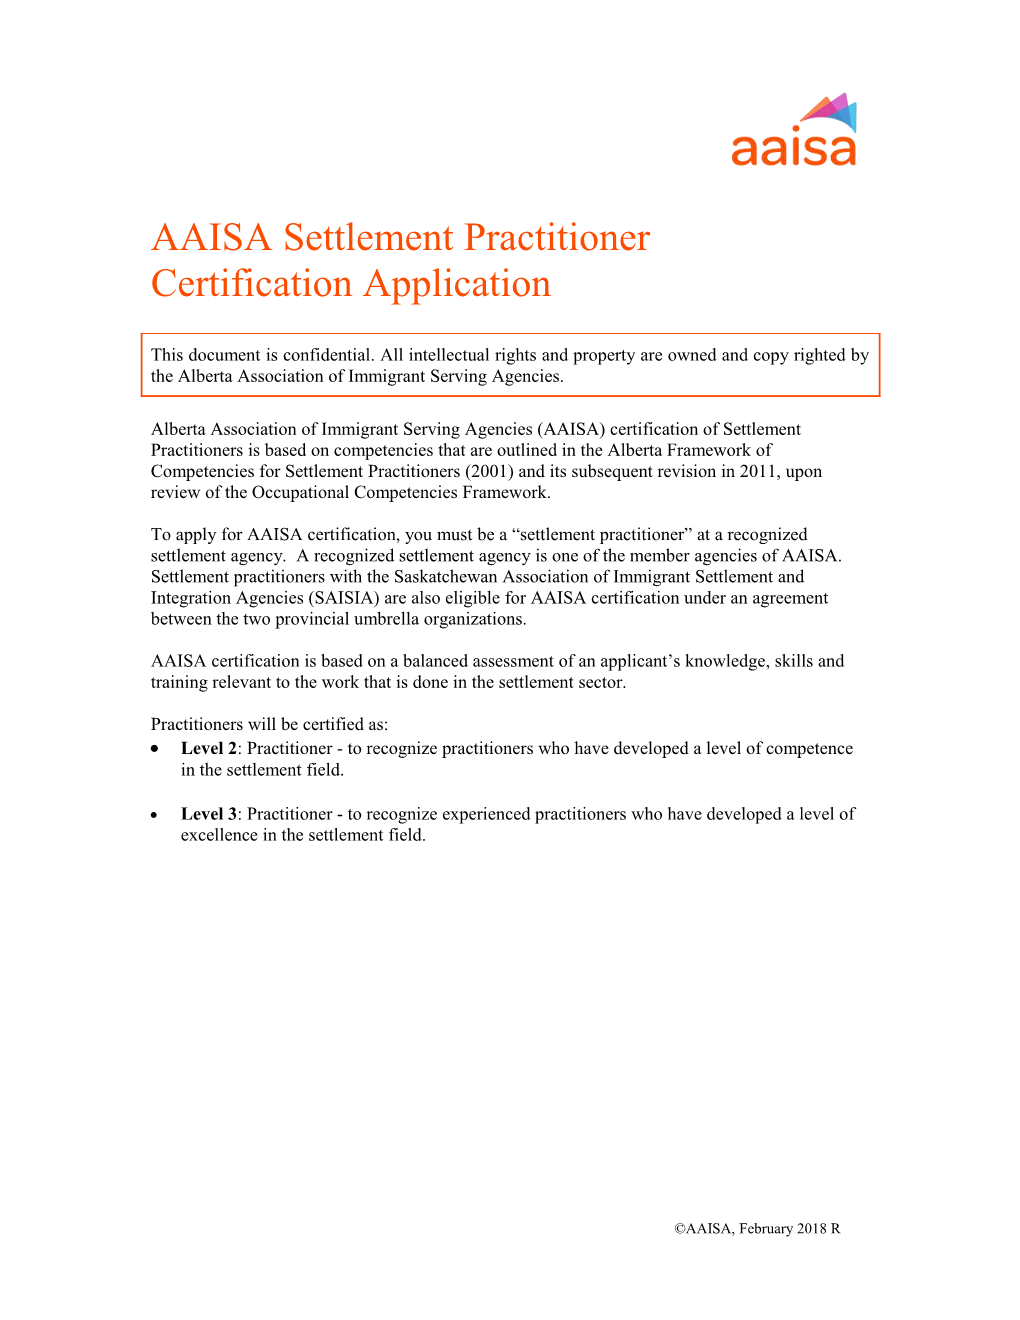 AAISA Settlement Practitioner Certification Application 1